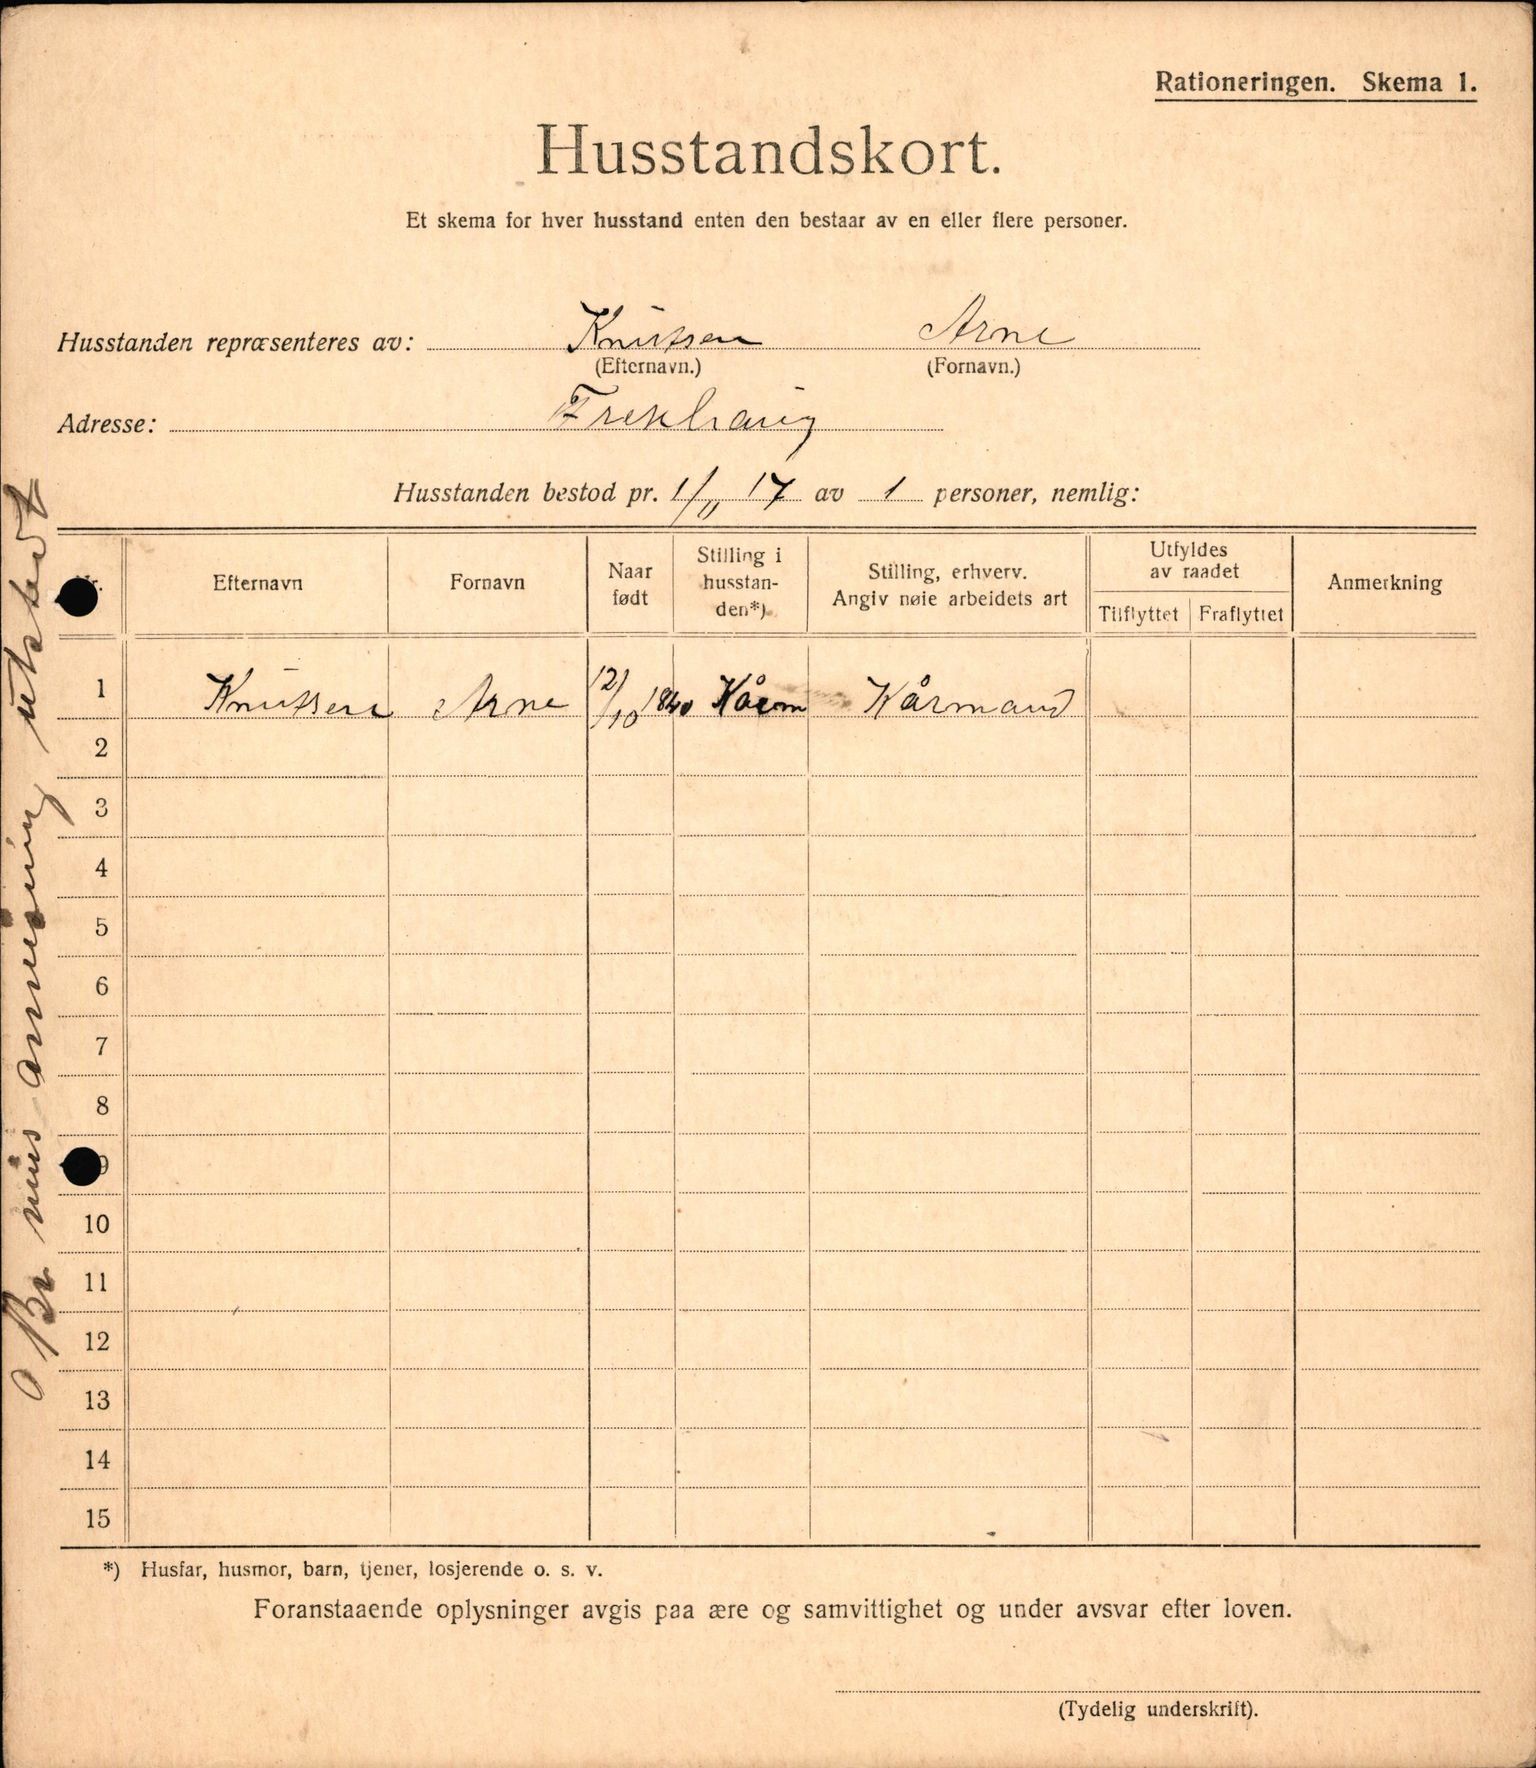 IKAH, Meland kommune, Provianteringsrådet, Husstander per 01.11.1917, 1917-1918, p. 160